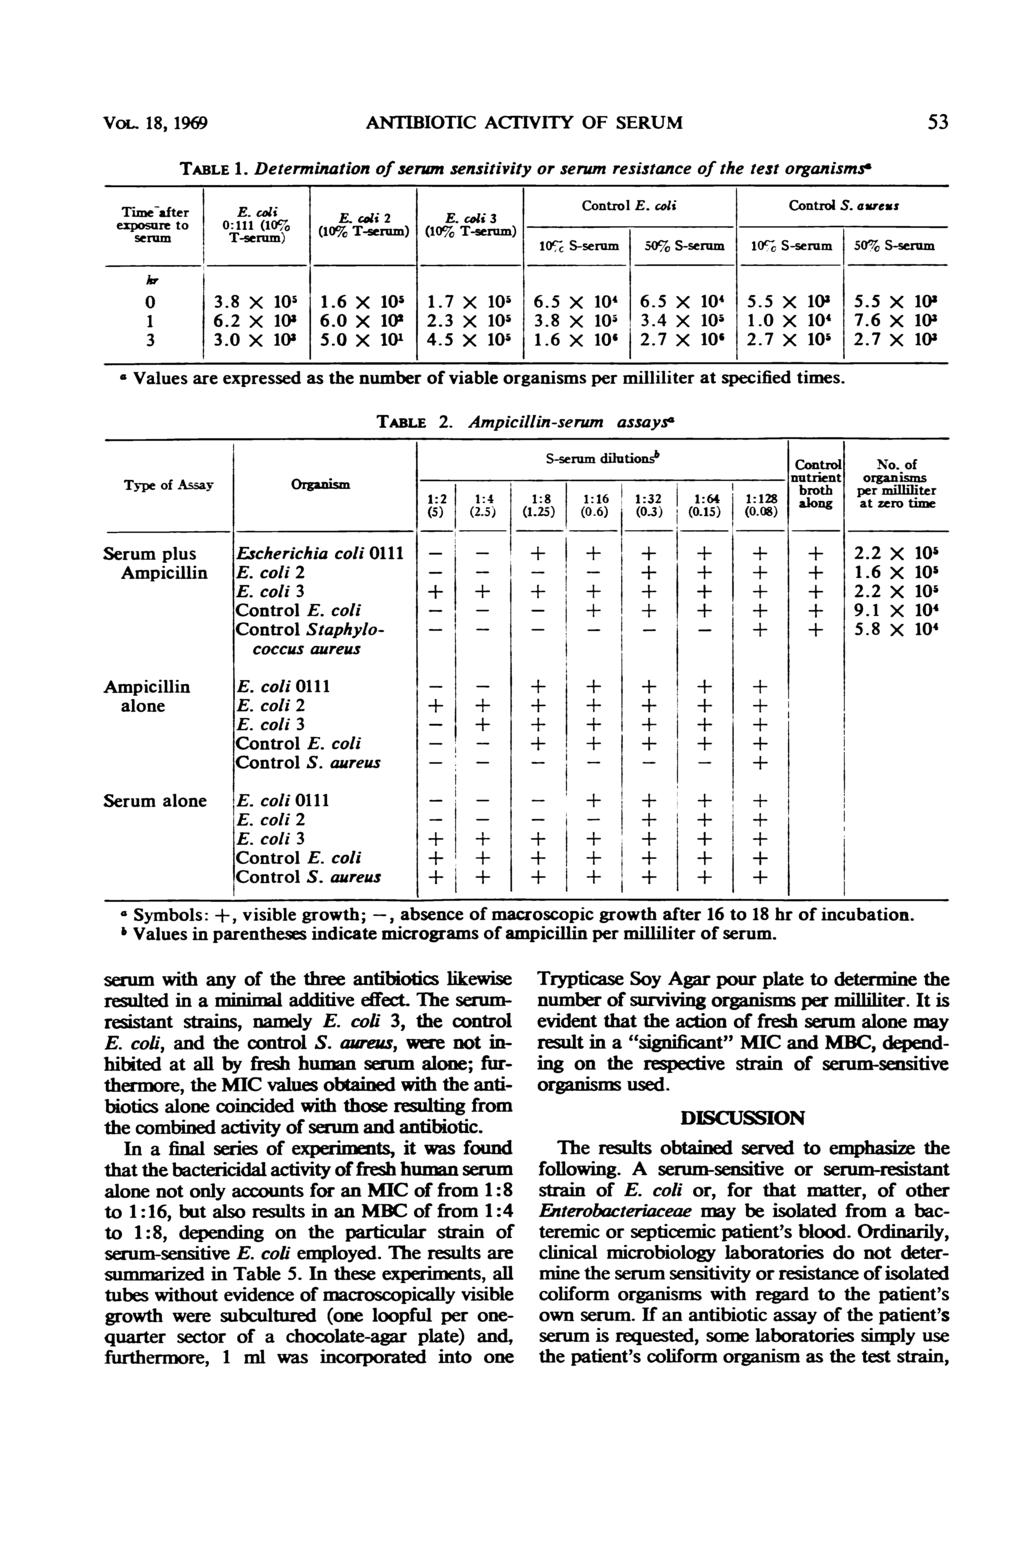 VoL. 18, 1969 ANTIBIOTIC ACTIVITY OF SERUM TABLE 1. Determination of serum sensitivity or serum resistance of the test organisms' 53 Tie-felposureto o t~i (107 E. Timsue fter E.11 cch, E. coli 2 E.